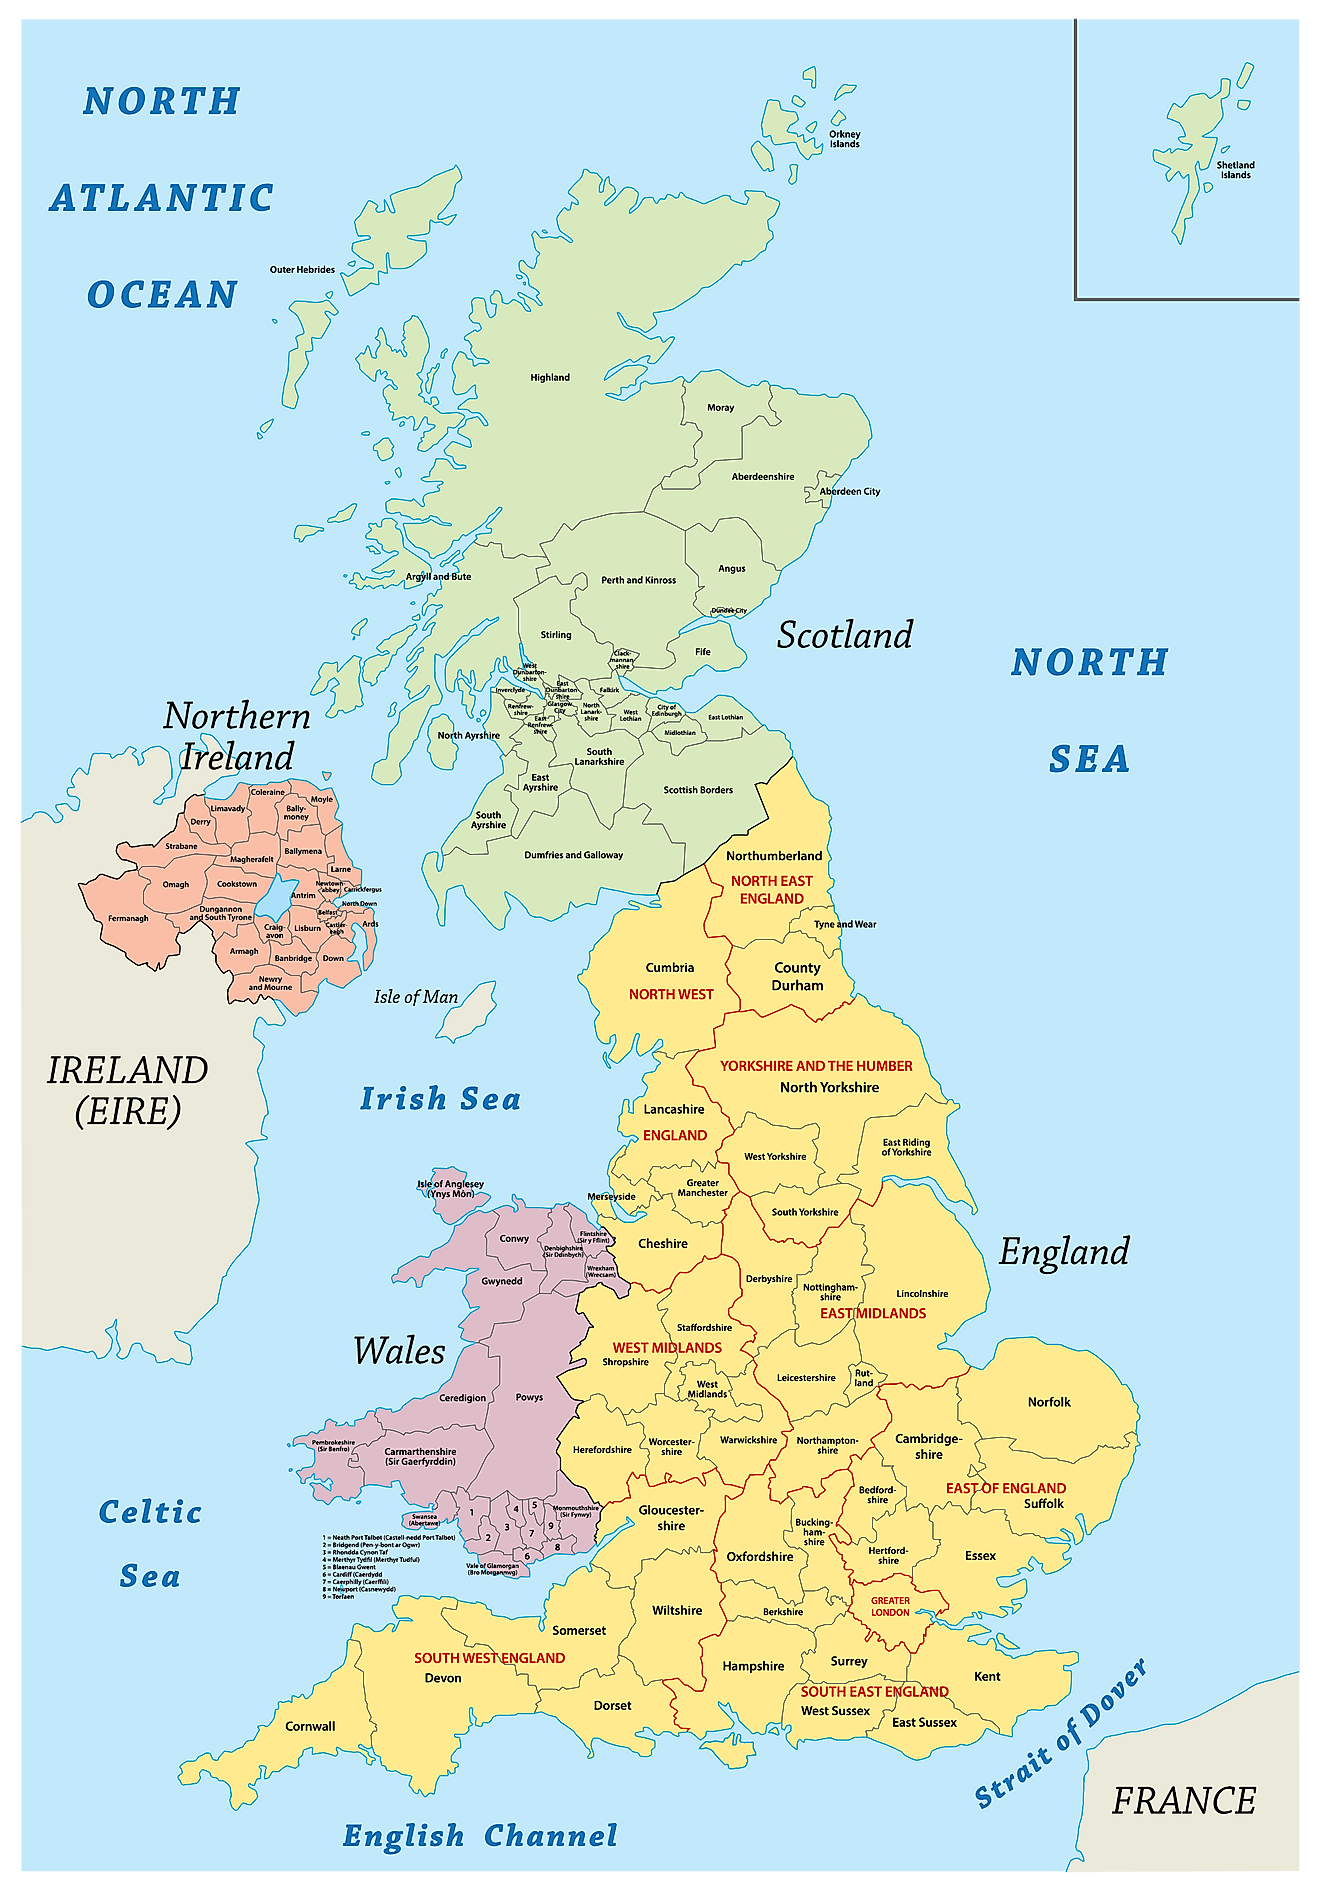 United Kingdom Location On World Map